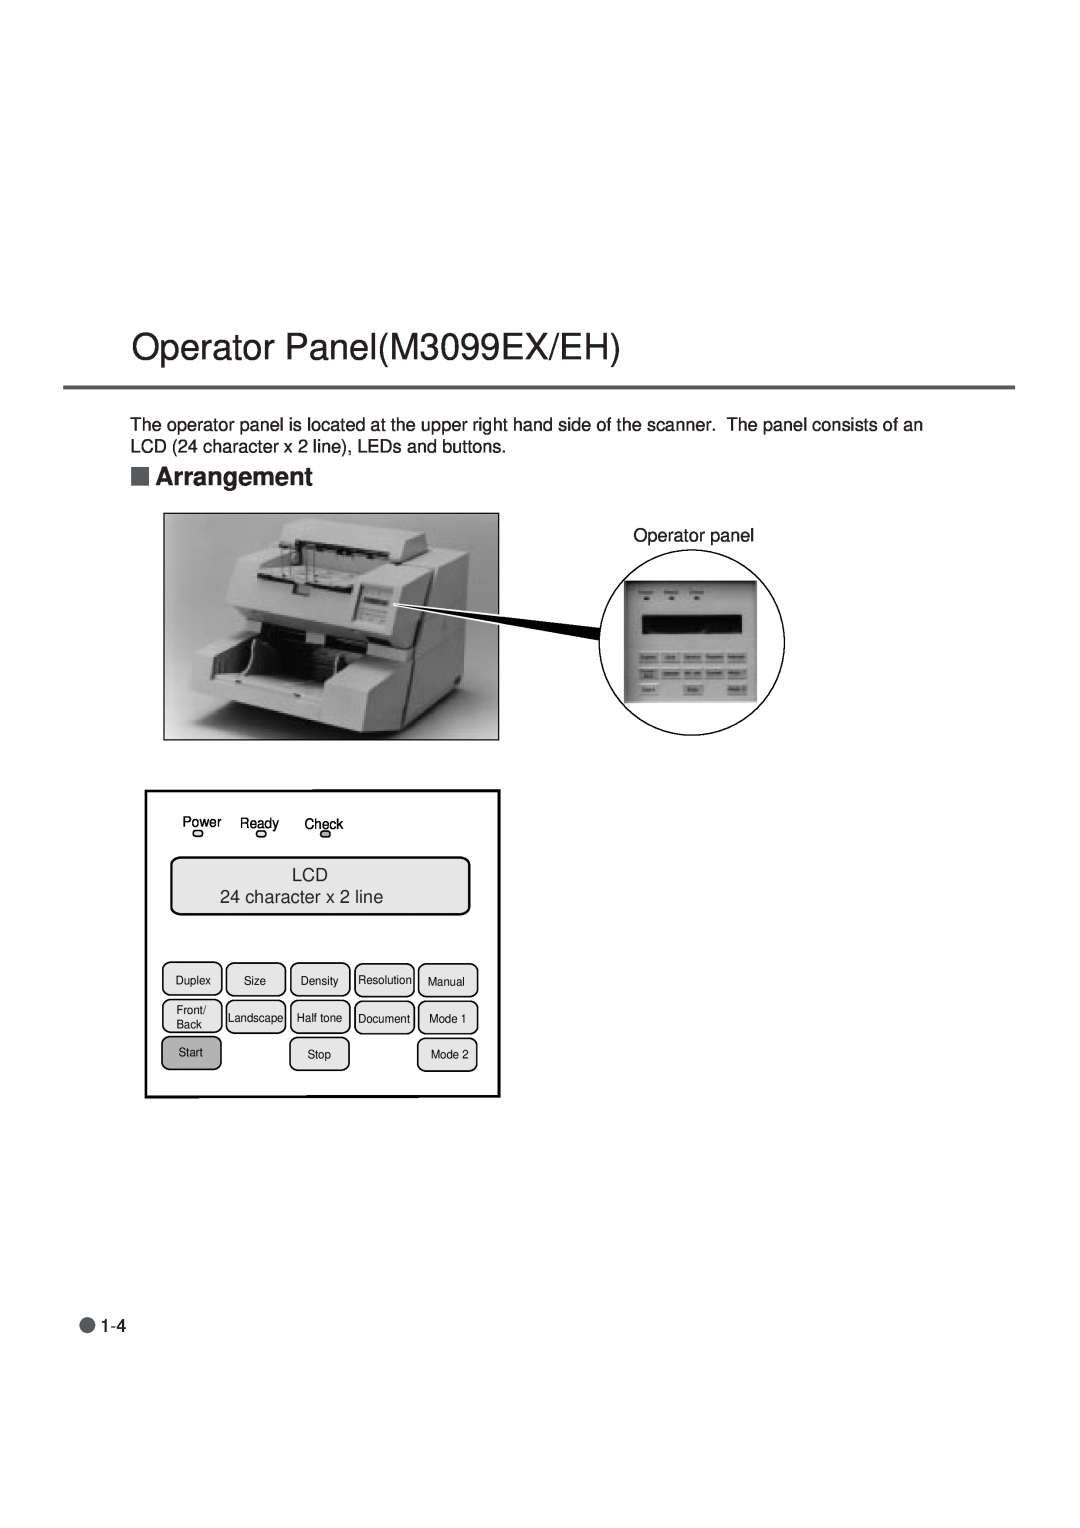 Fujitsu M3099GH Operator PanelM3099EX/EH, Arrangement, Duplex, Size, Resolution, Manual, Front, Document, Back, Start 